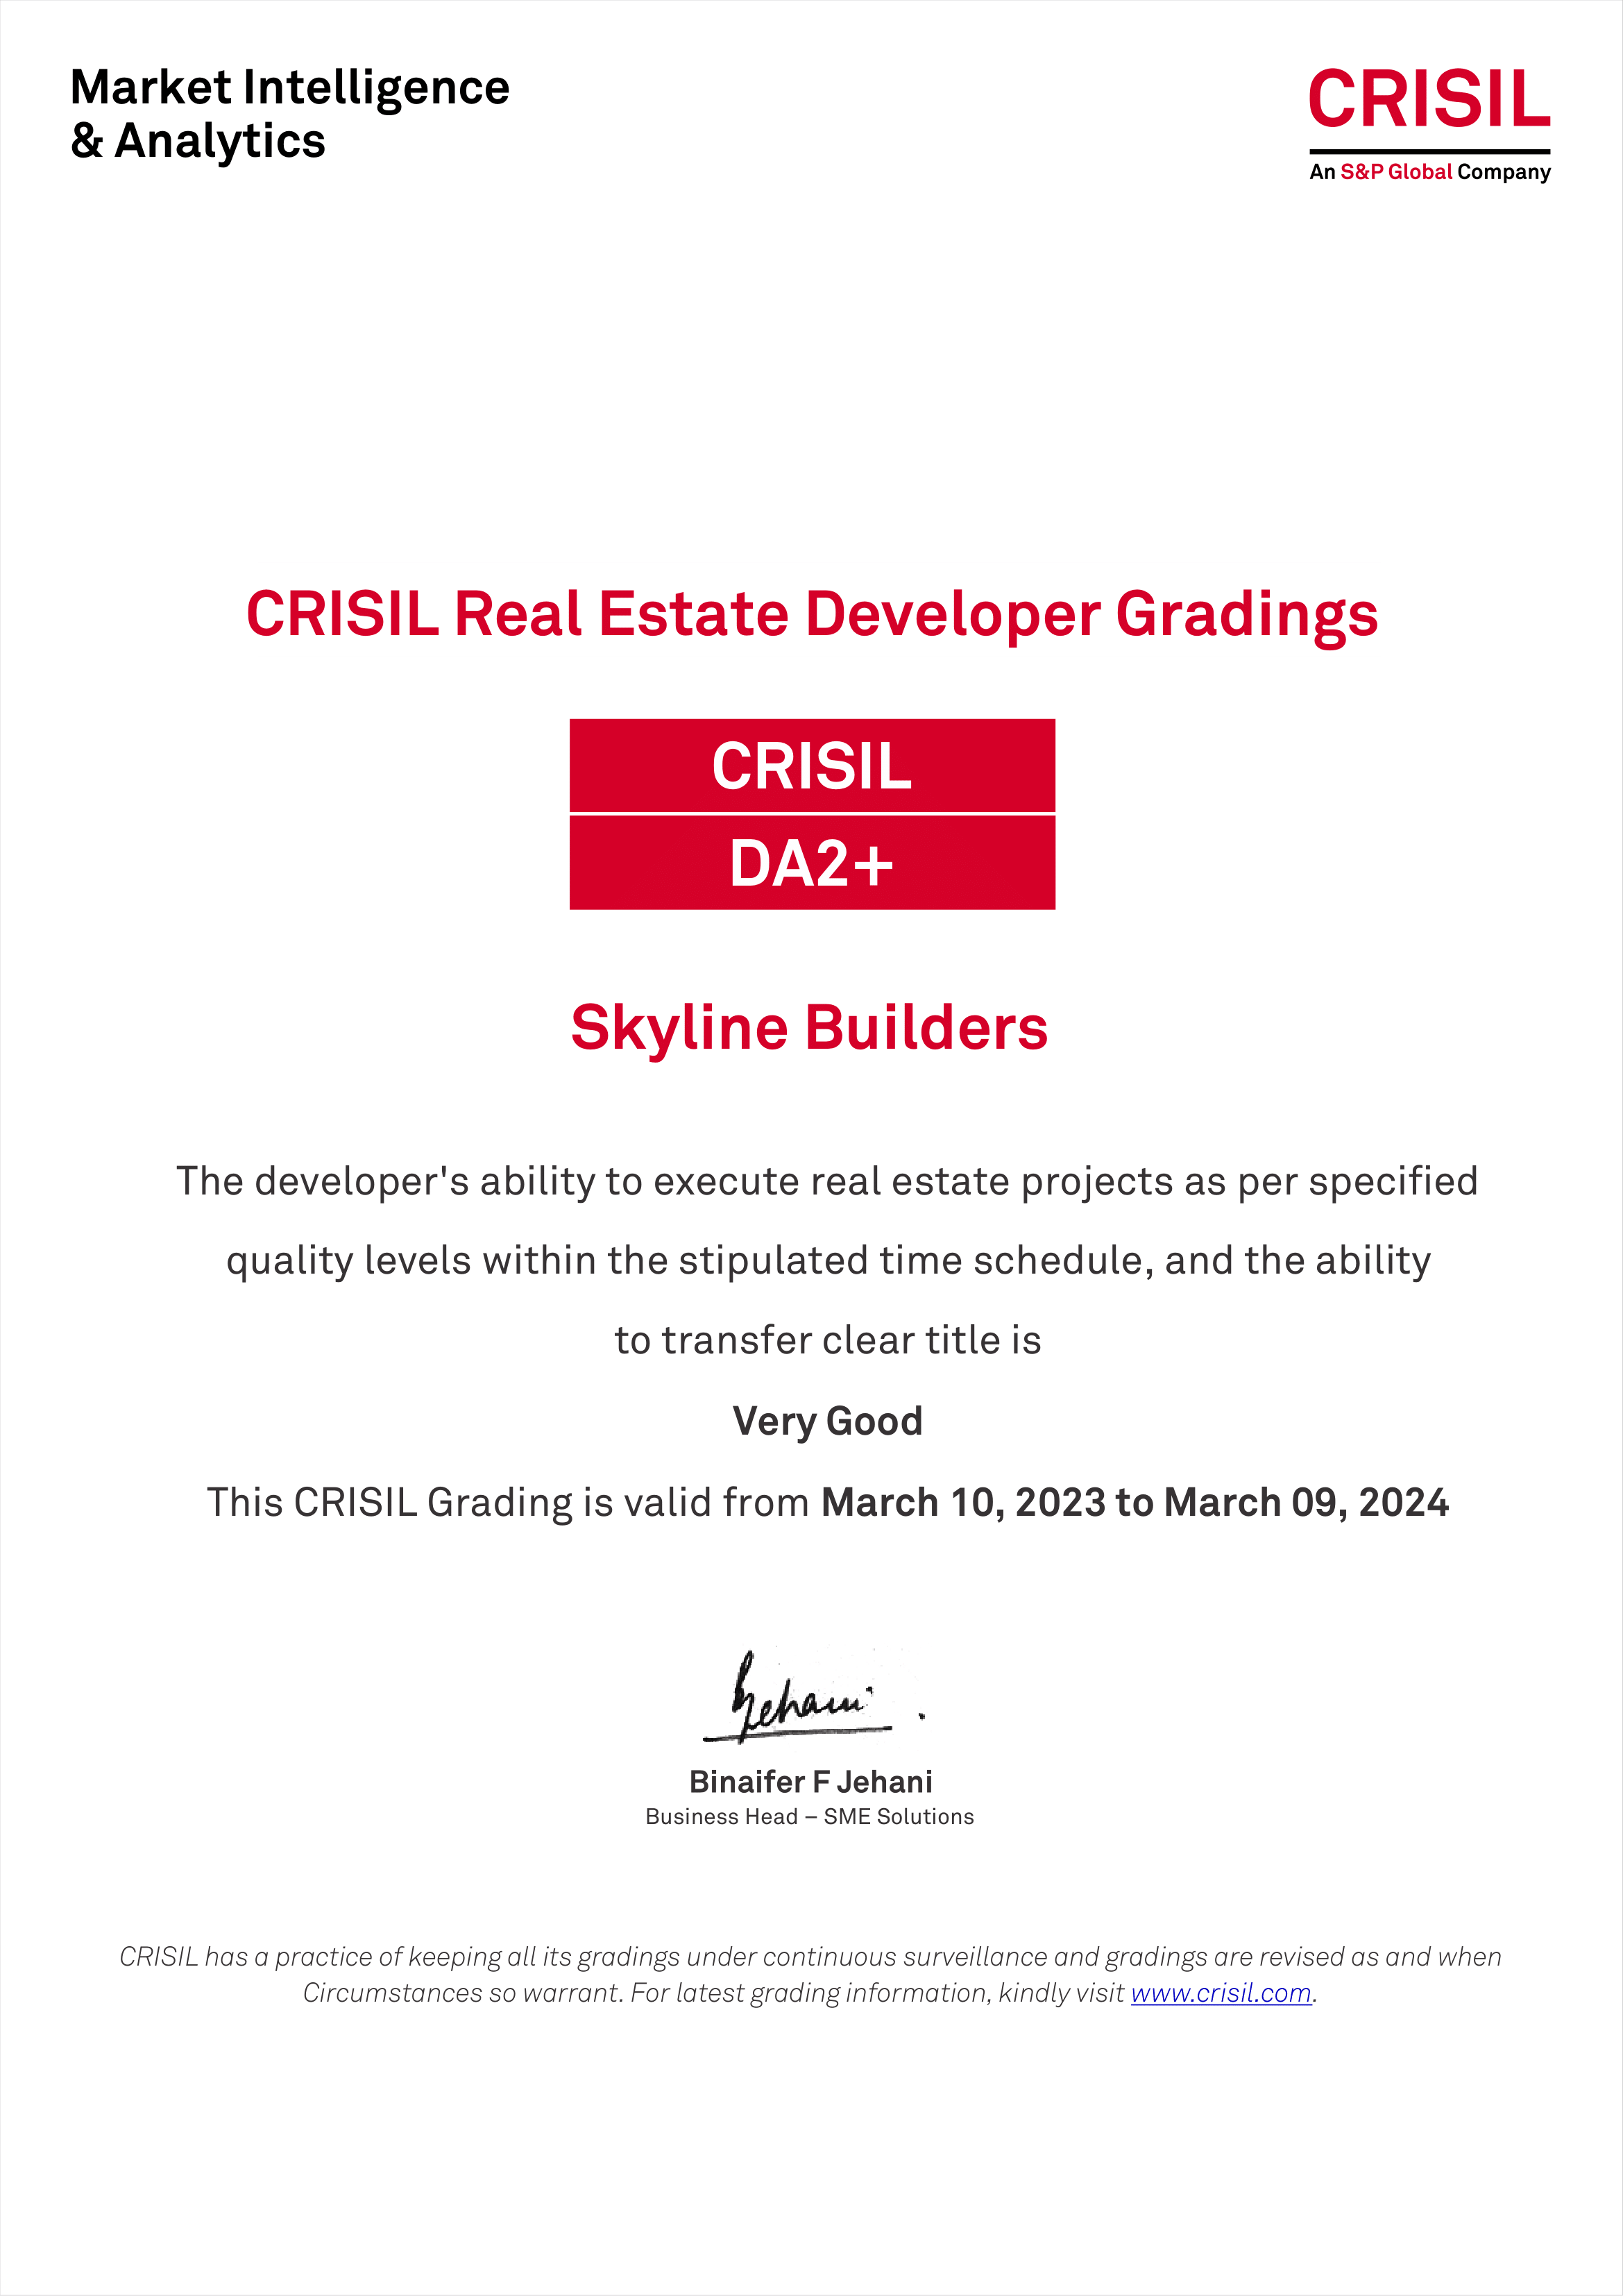 Skyline-Builders_Grading-Certificate